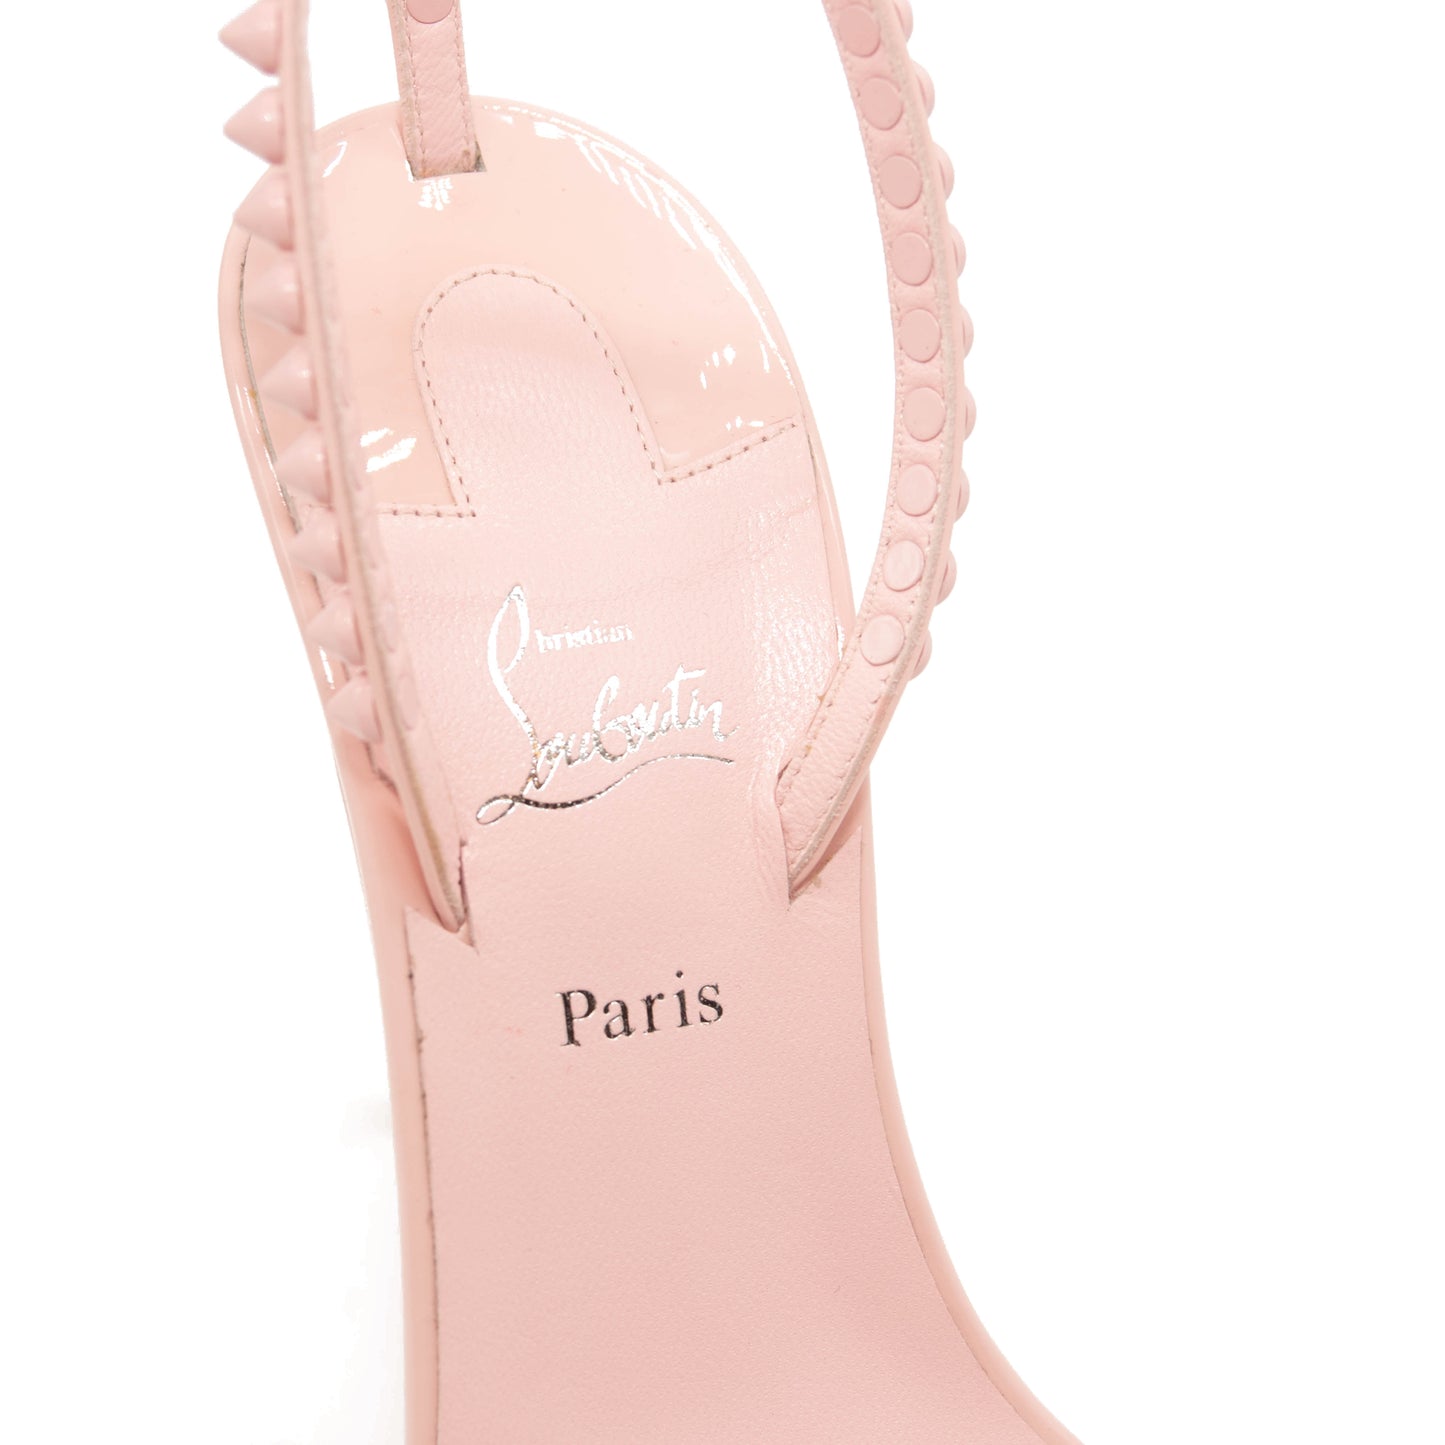 NEW Christian Louboutin So Me Ankle Strap Sandal Rosy Pink EU 36.5 Pumps